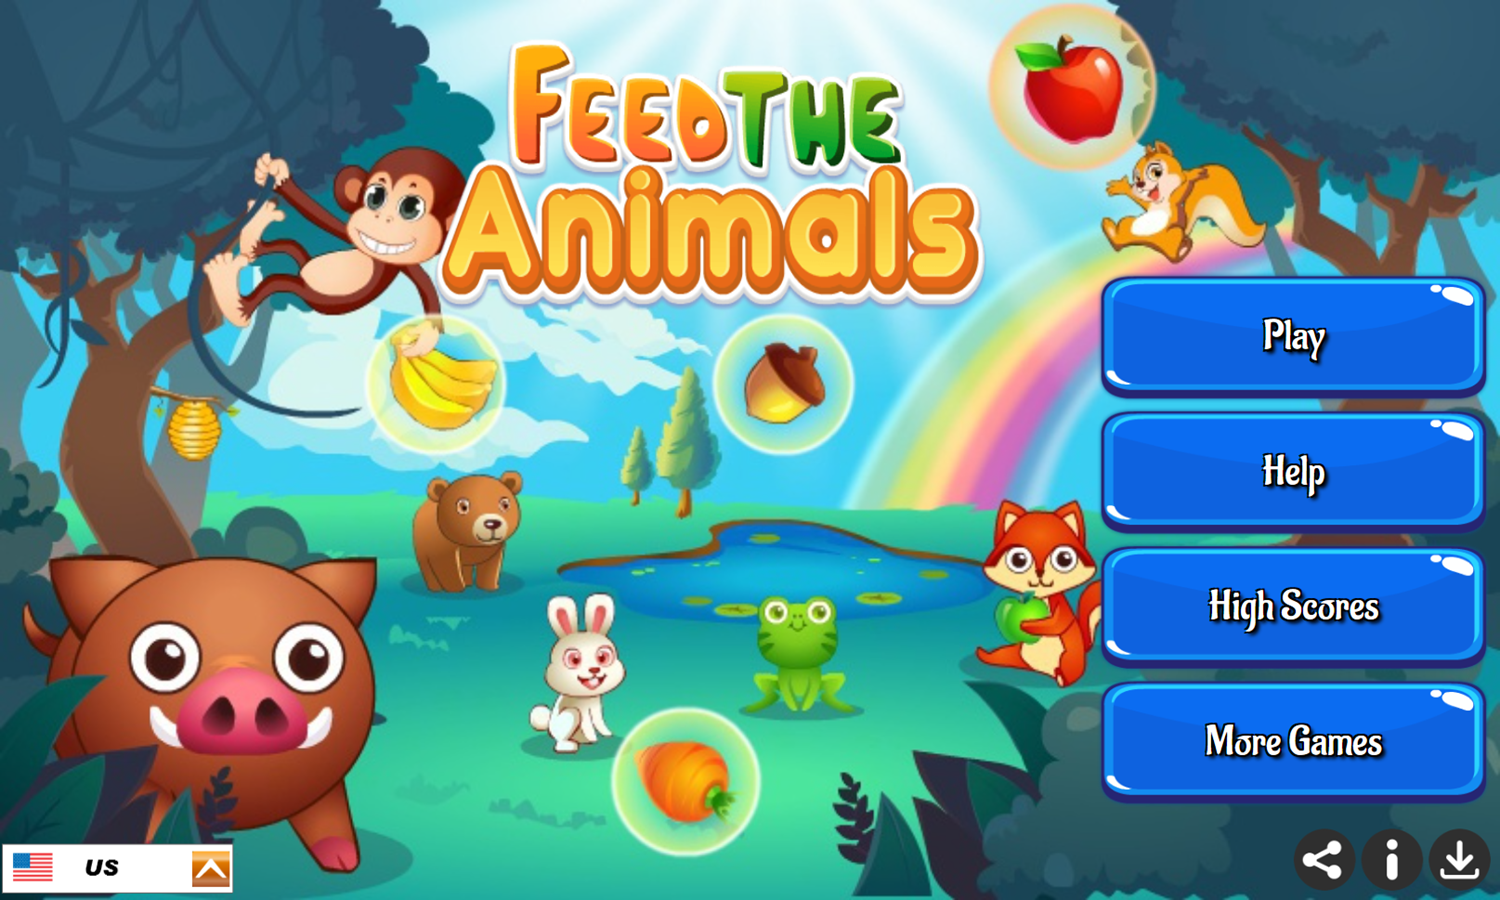 Feed the Animals Game Welcome Screen Screenshot.